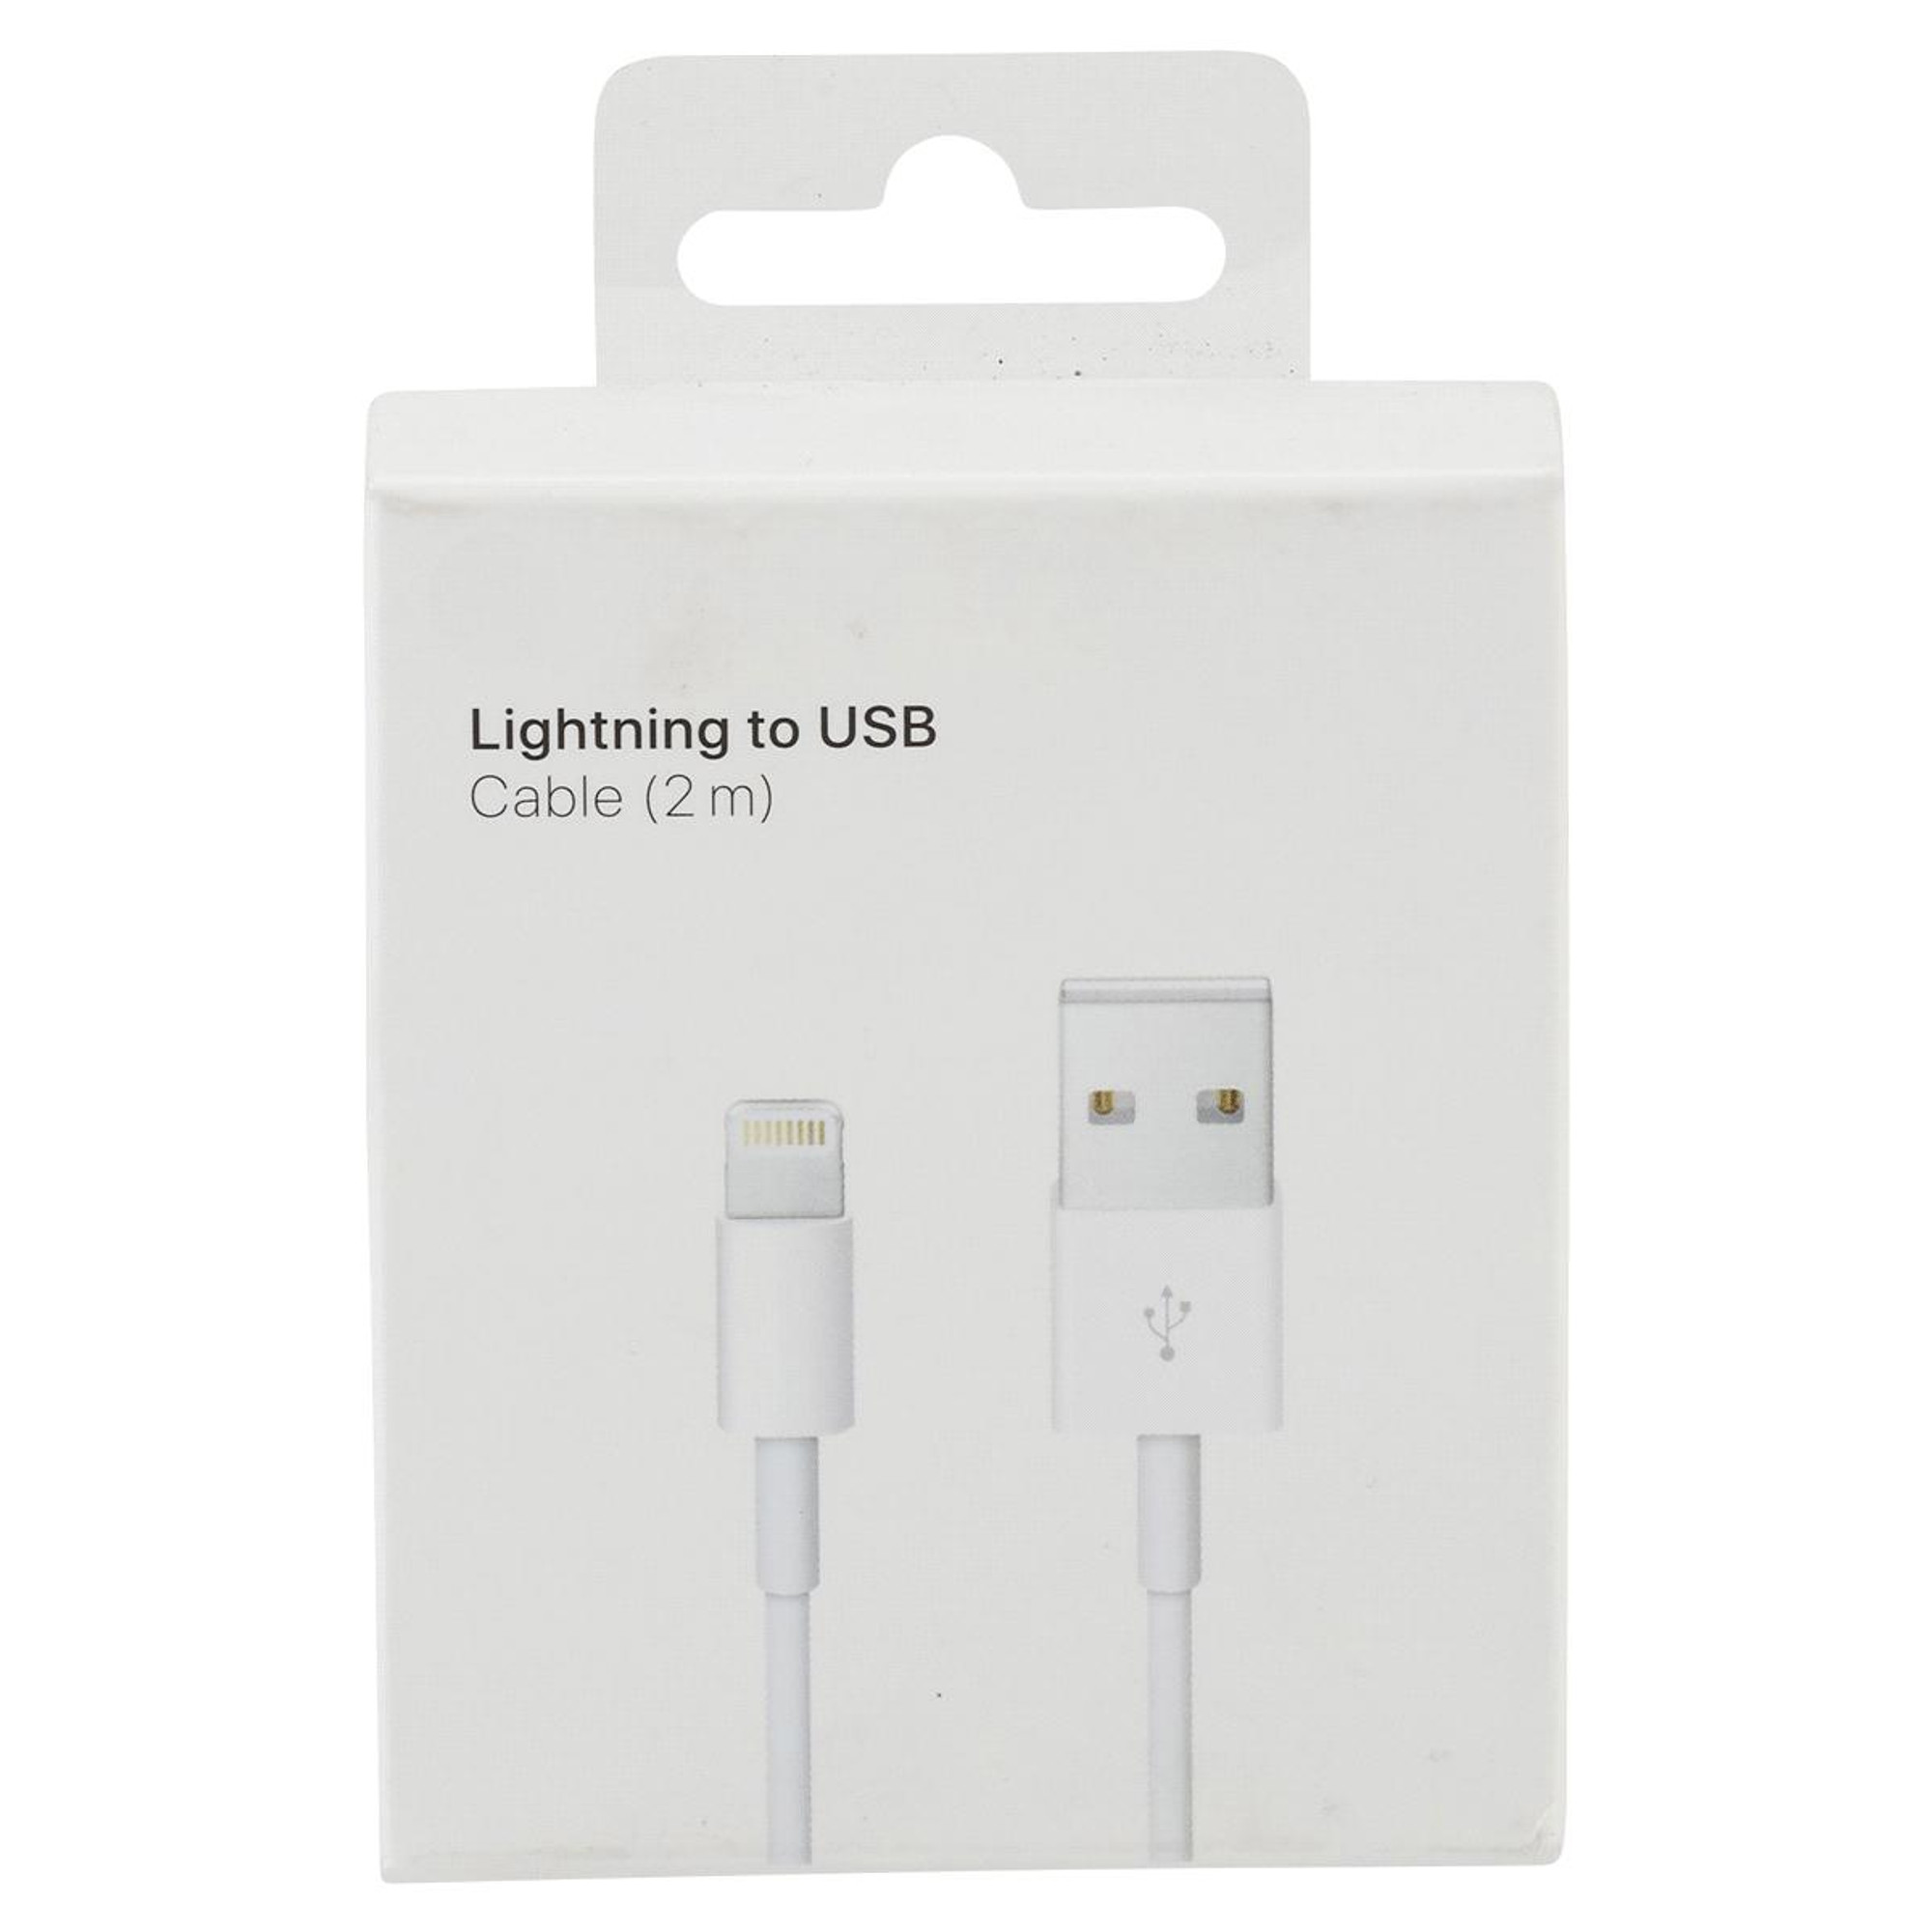 Asimilación Formular comprador WHITE LIGHTNING TO USB CABLE 2M ( 6.5 FT ) - BAG OF 5CT